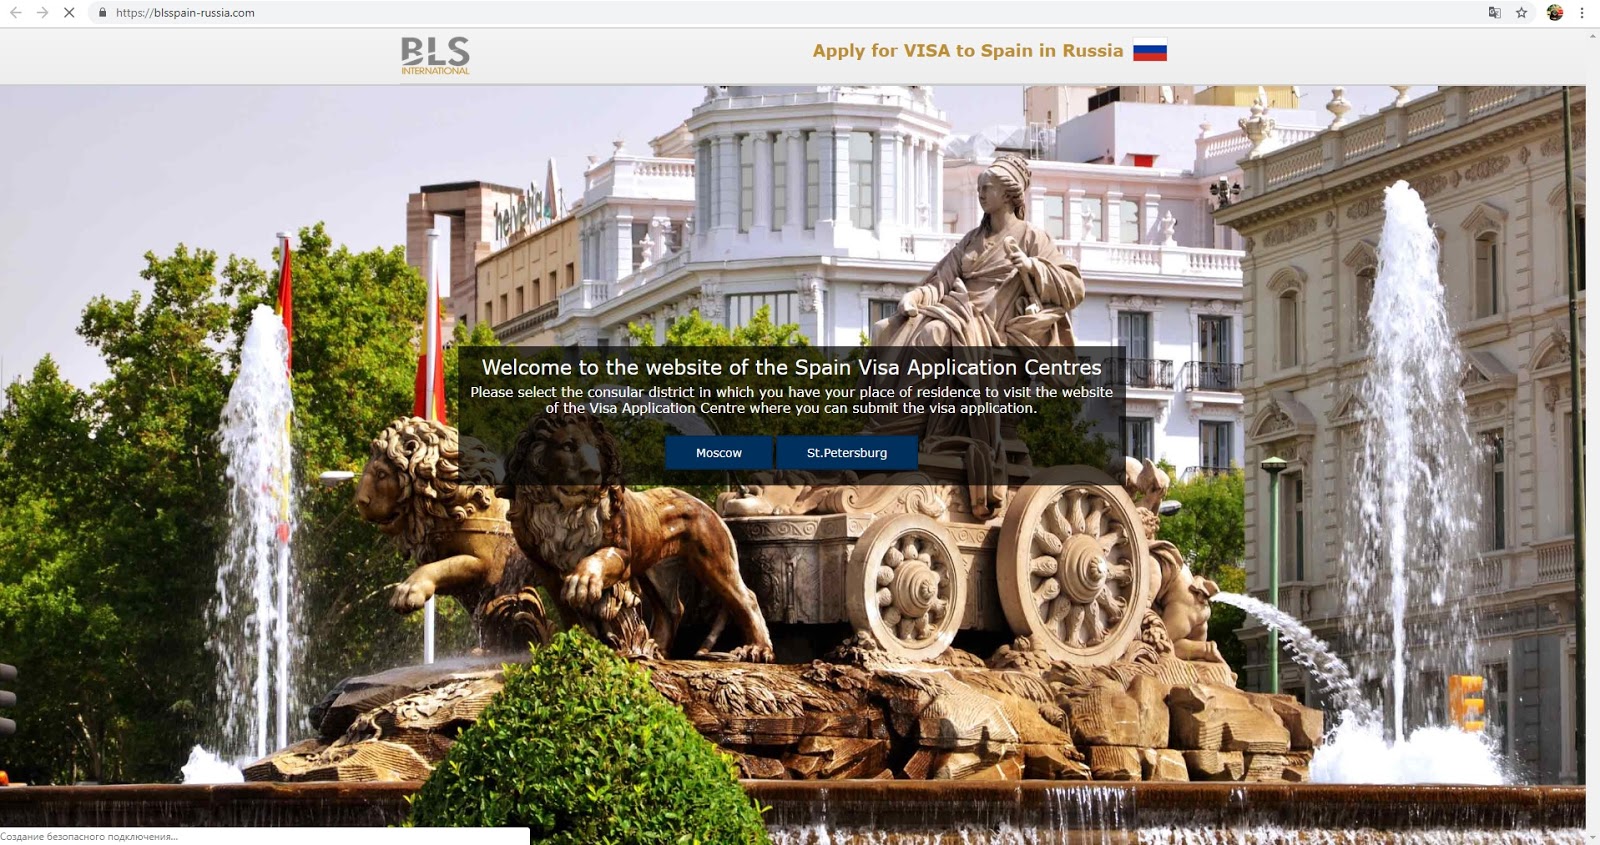 Bls visa. БЛС визовый центр Испании. BLS Spain СПБ visa. Armenia BLS Spain. Blsspain Russia com Moscow www.